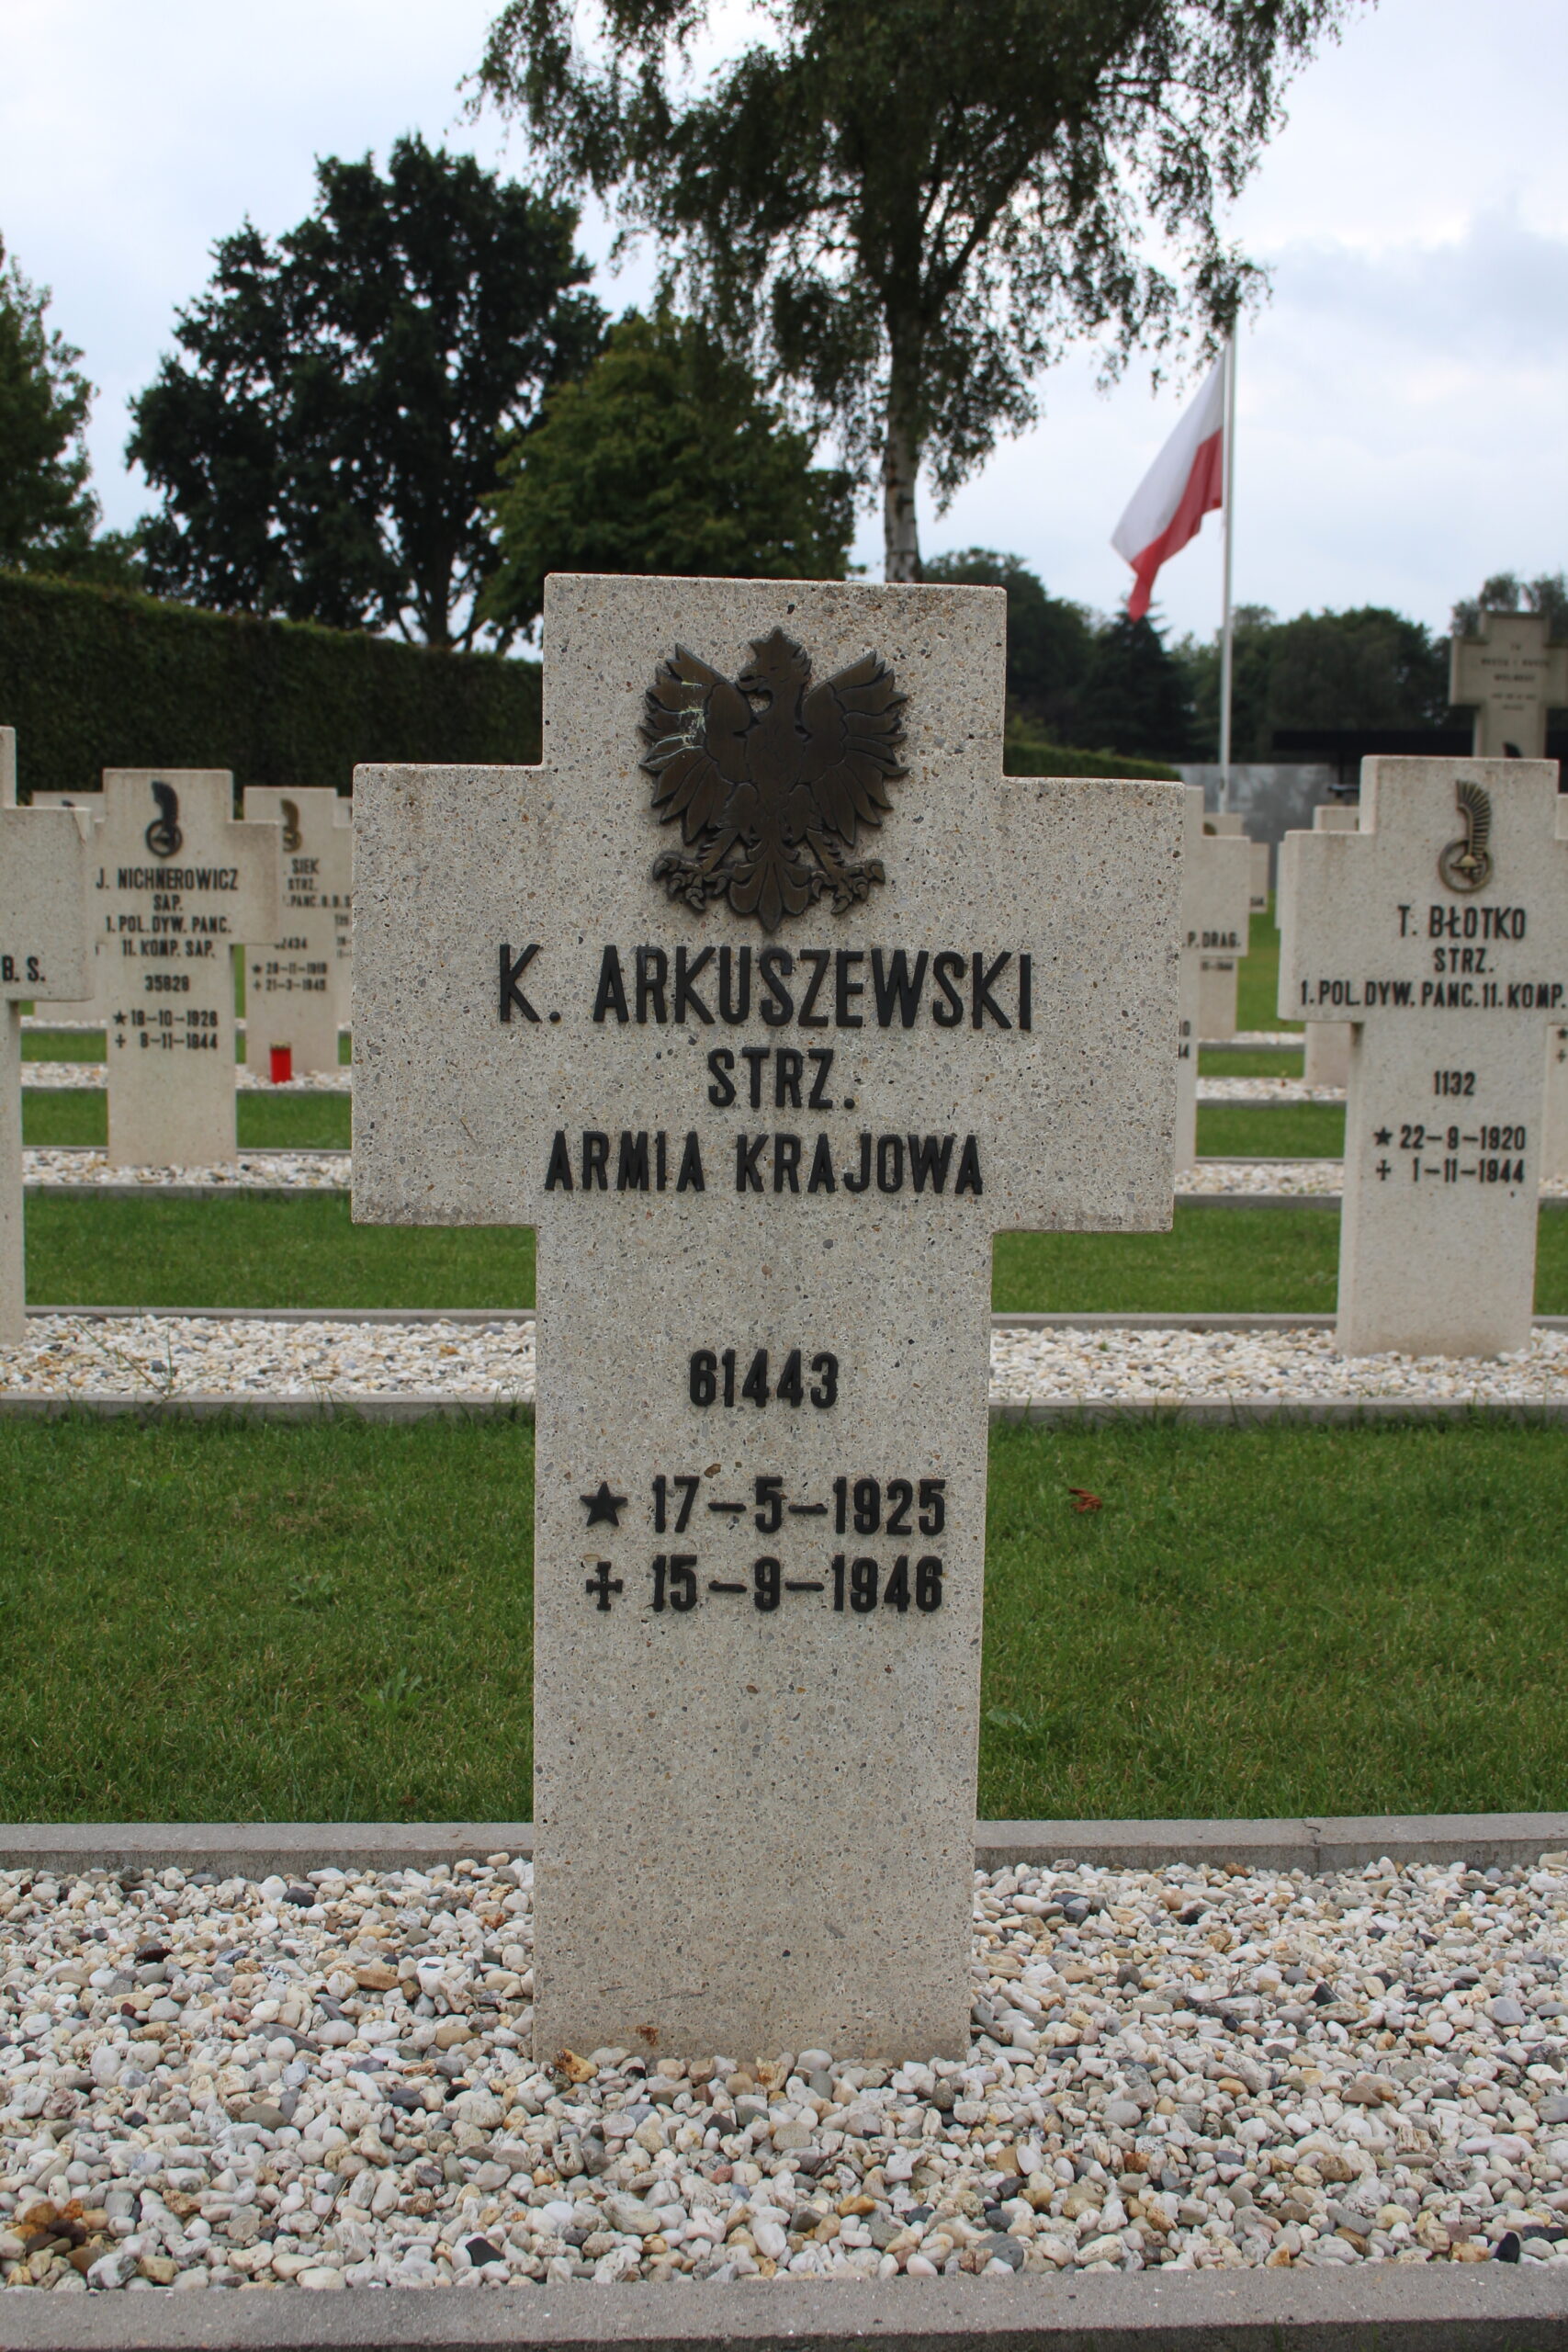 K. Arkuszewski